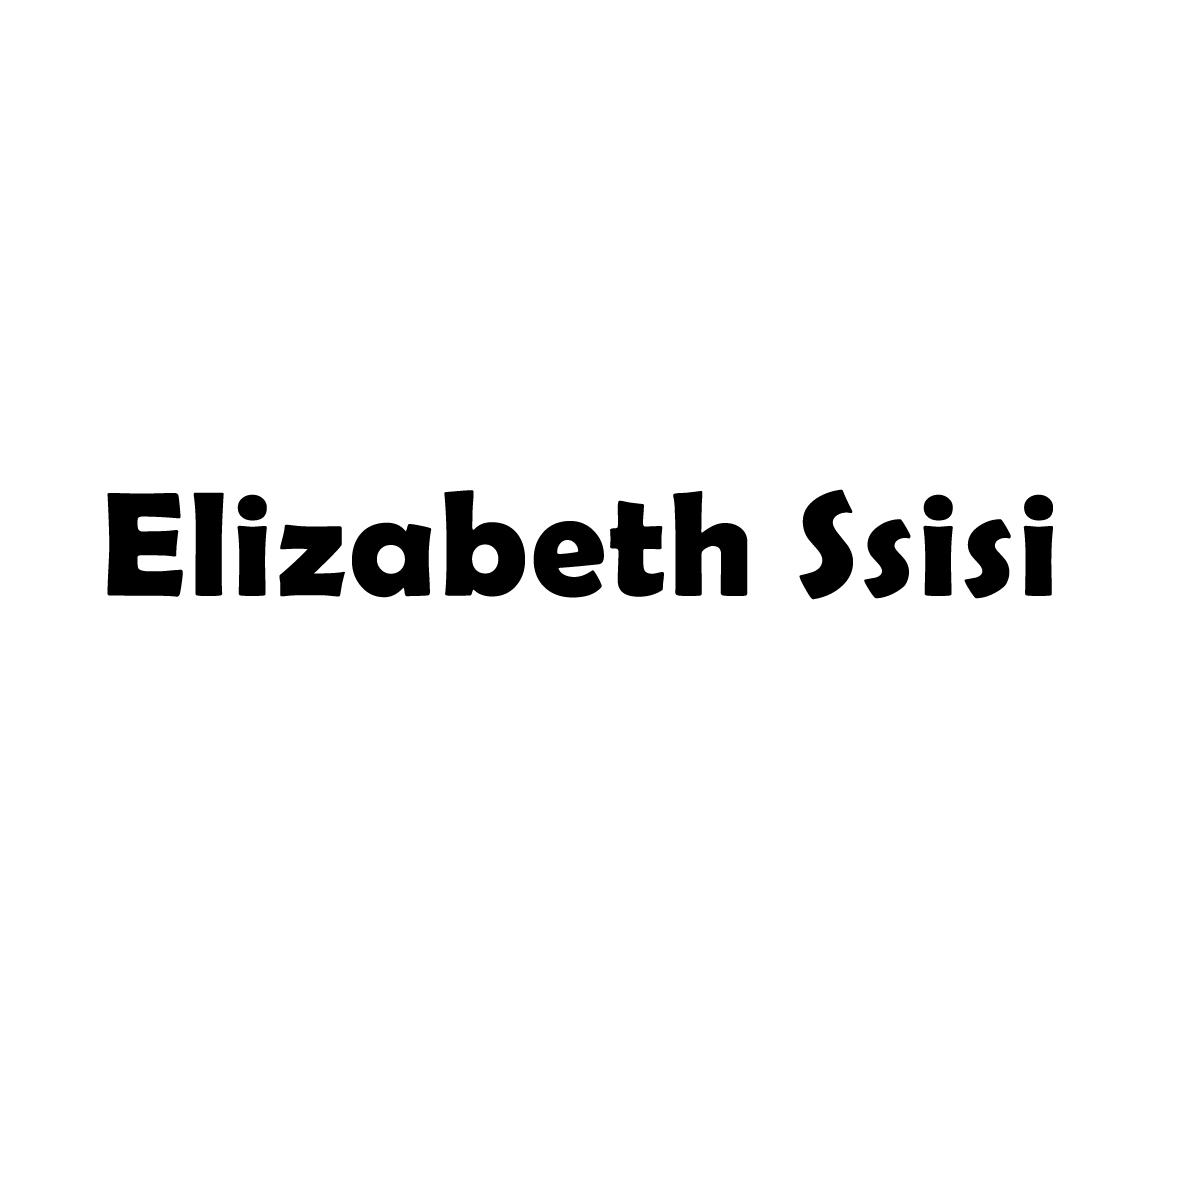 09类-科学仪器ELIZABETH SSISI商标转让